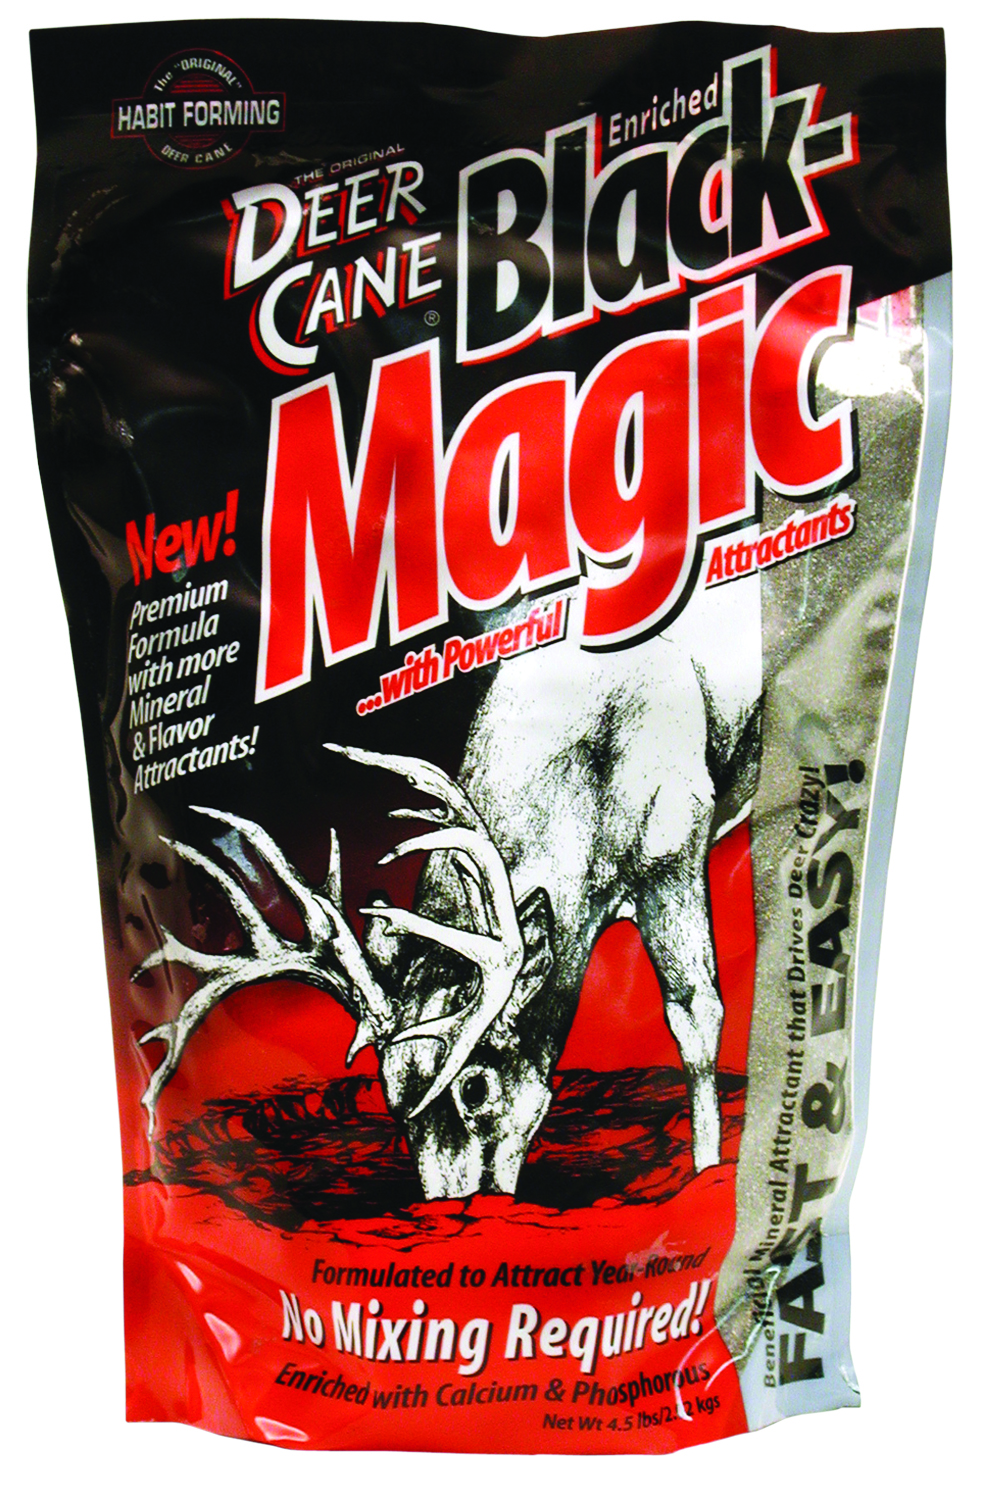 Deer Cane Black Magic 4.5 lb